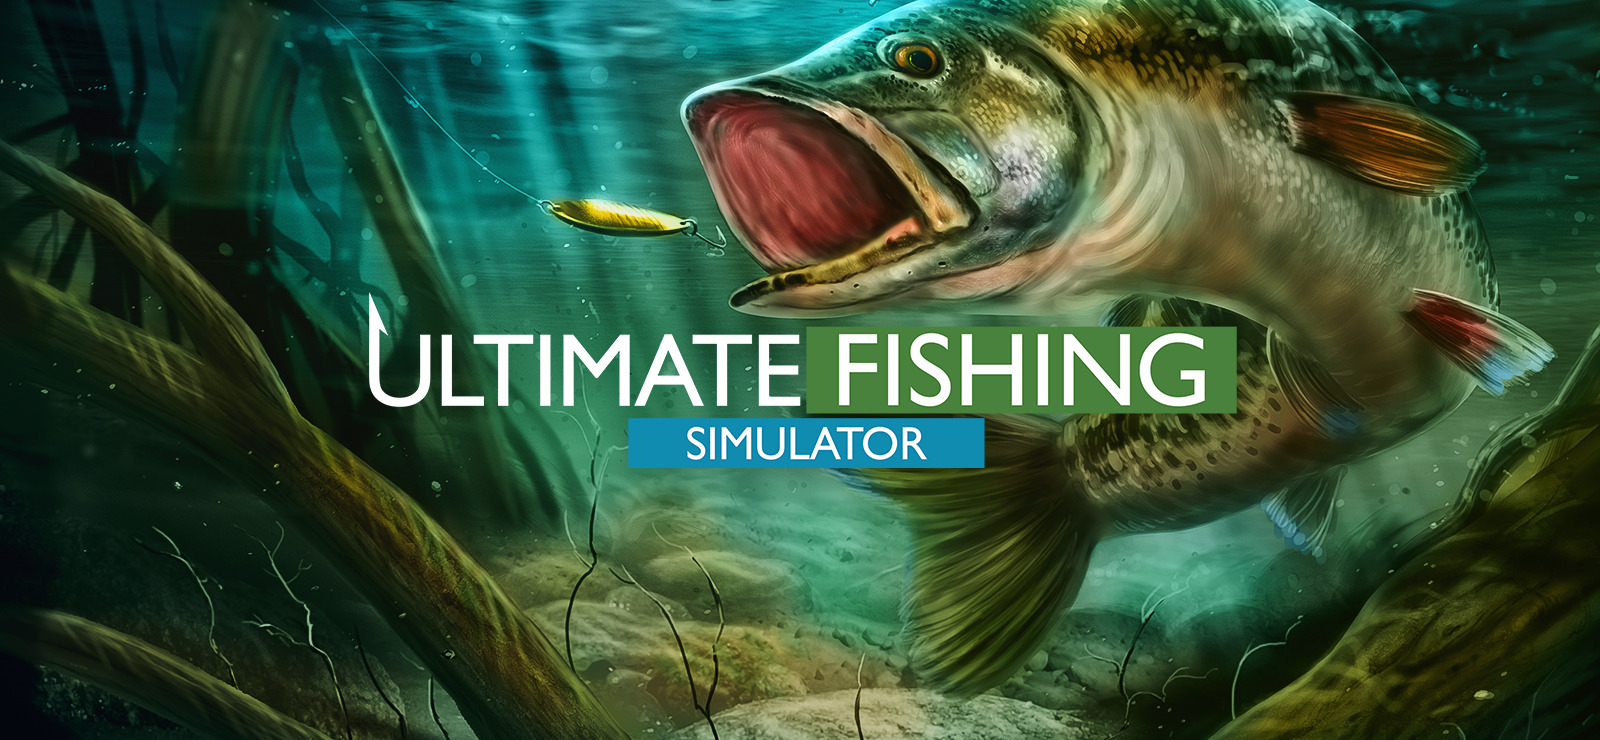 Ultimate Fishing Simulator on